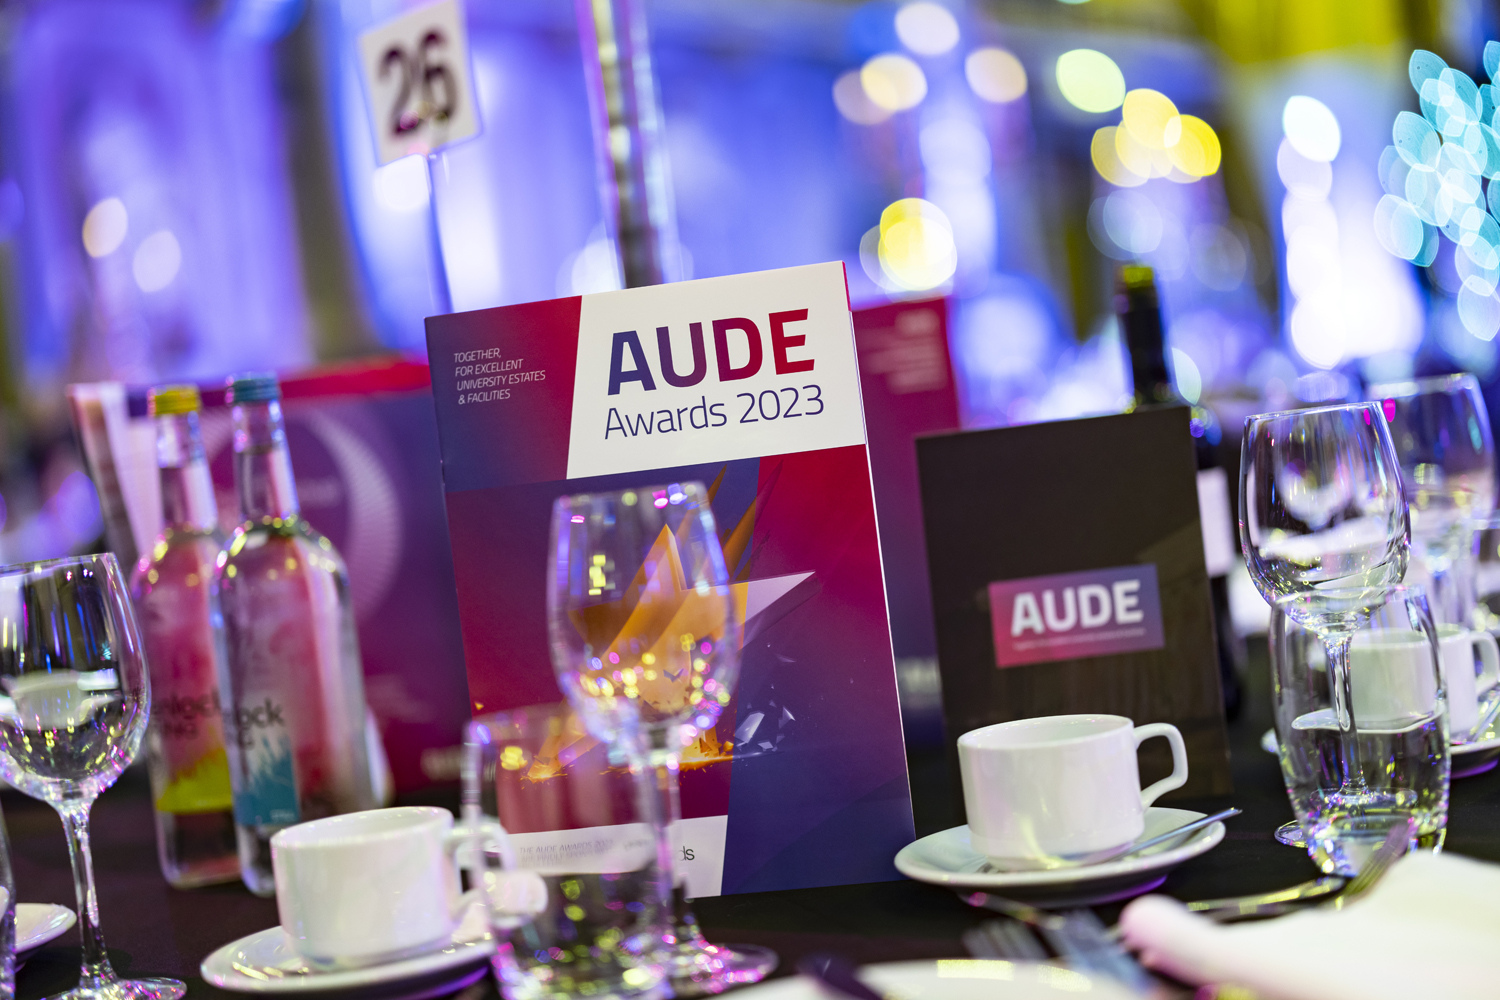 AUDE Annual Awards 2023